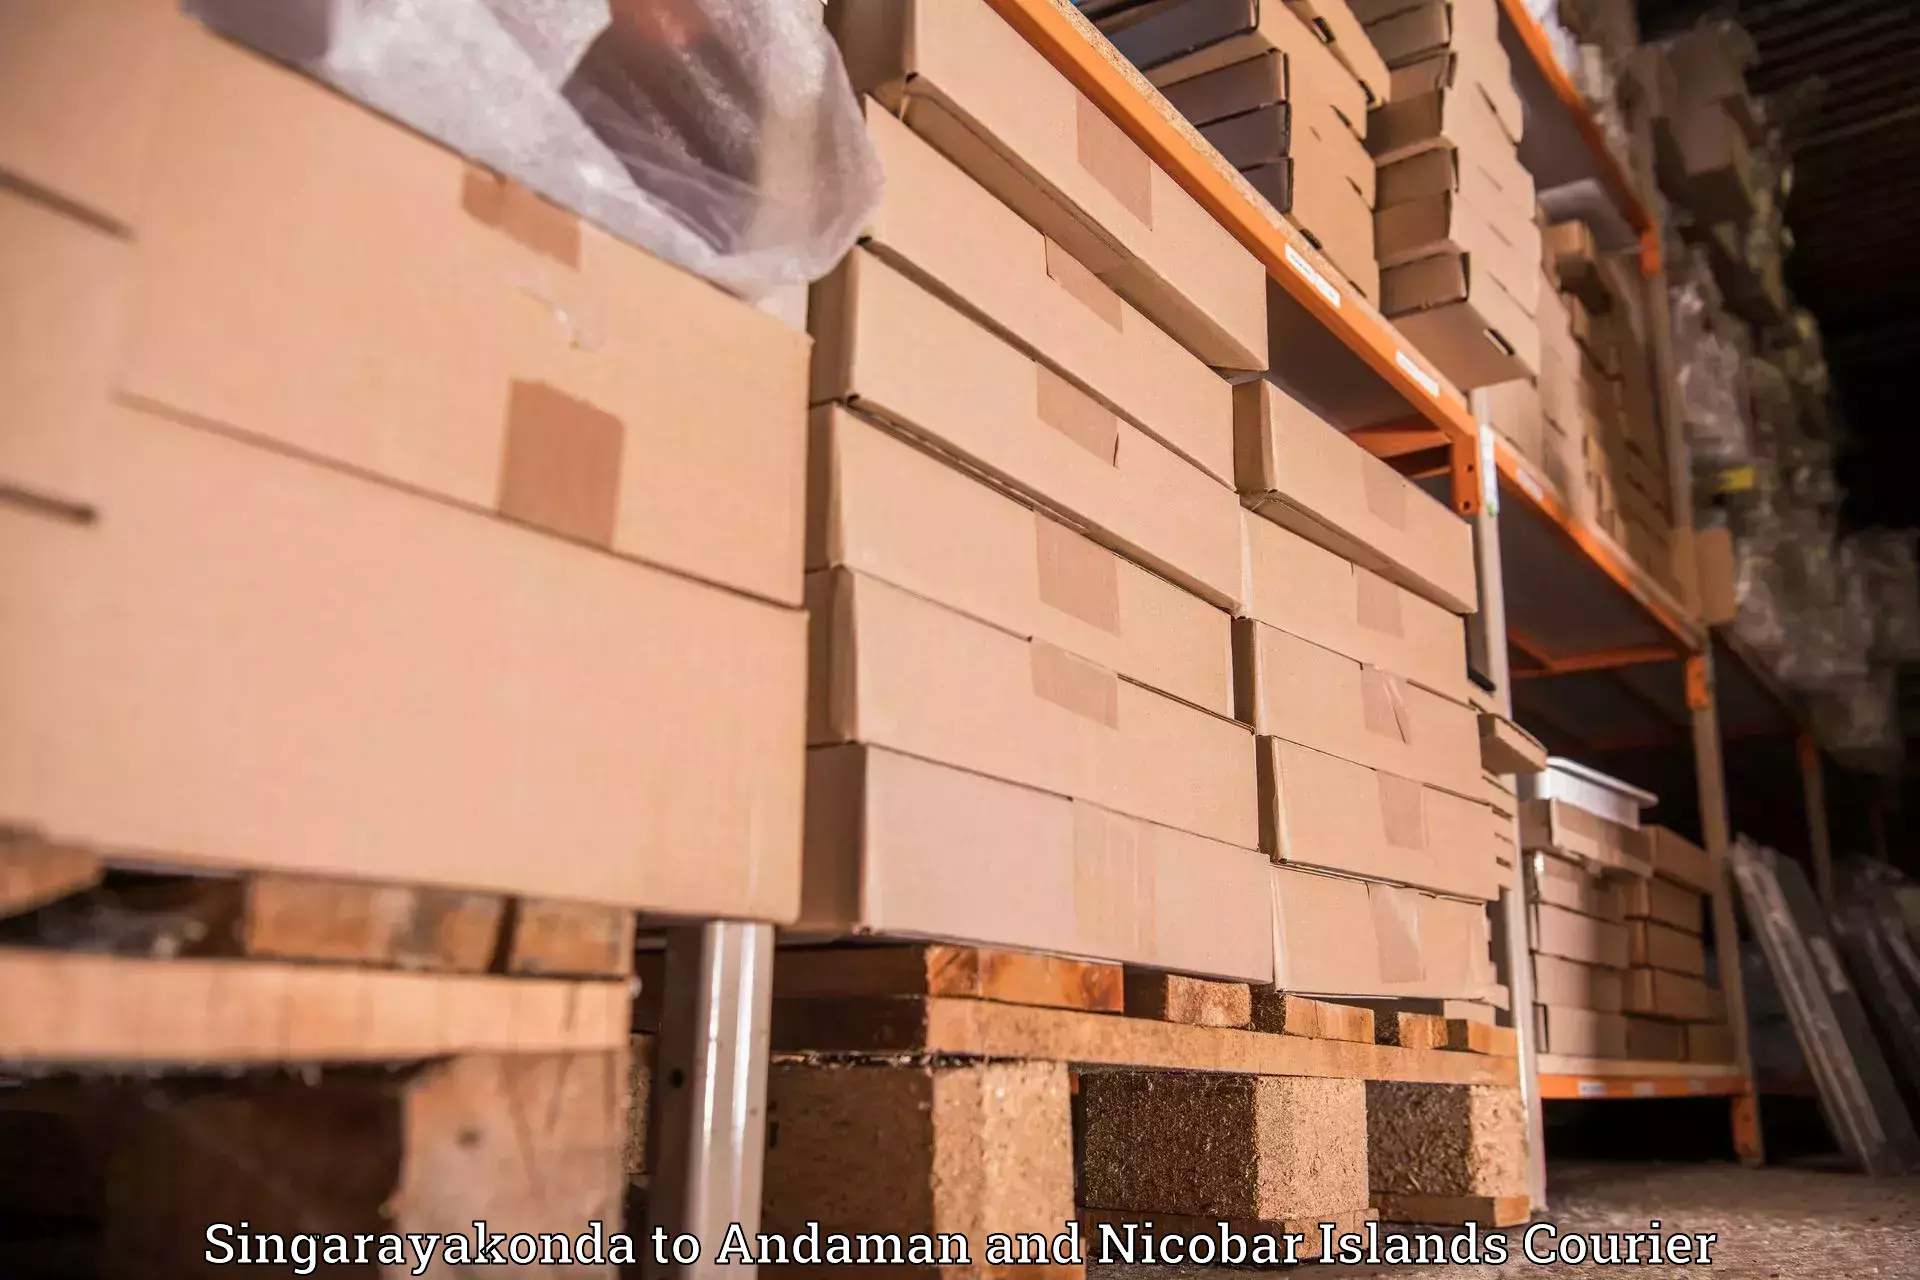 Package delivery network Singarayakonda to Nicobar